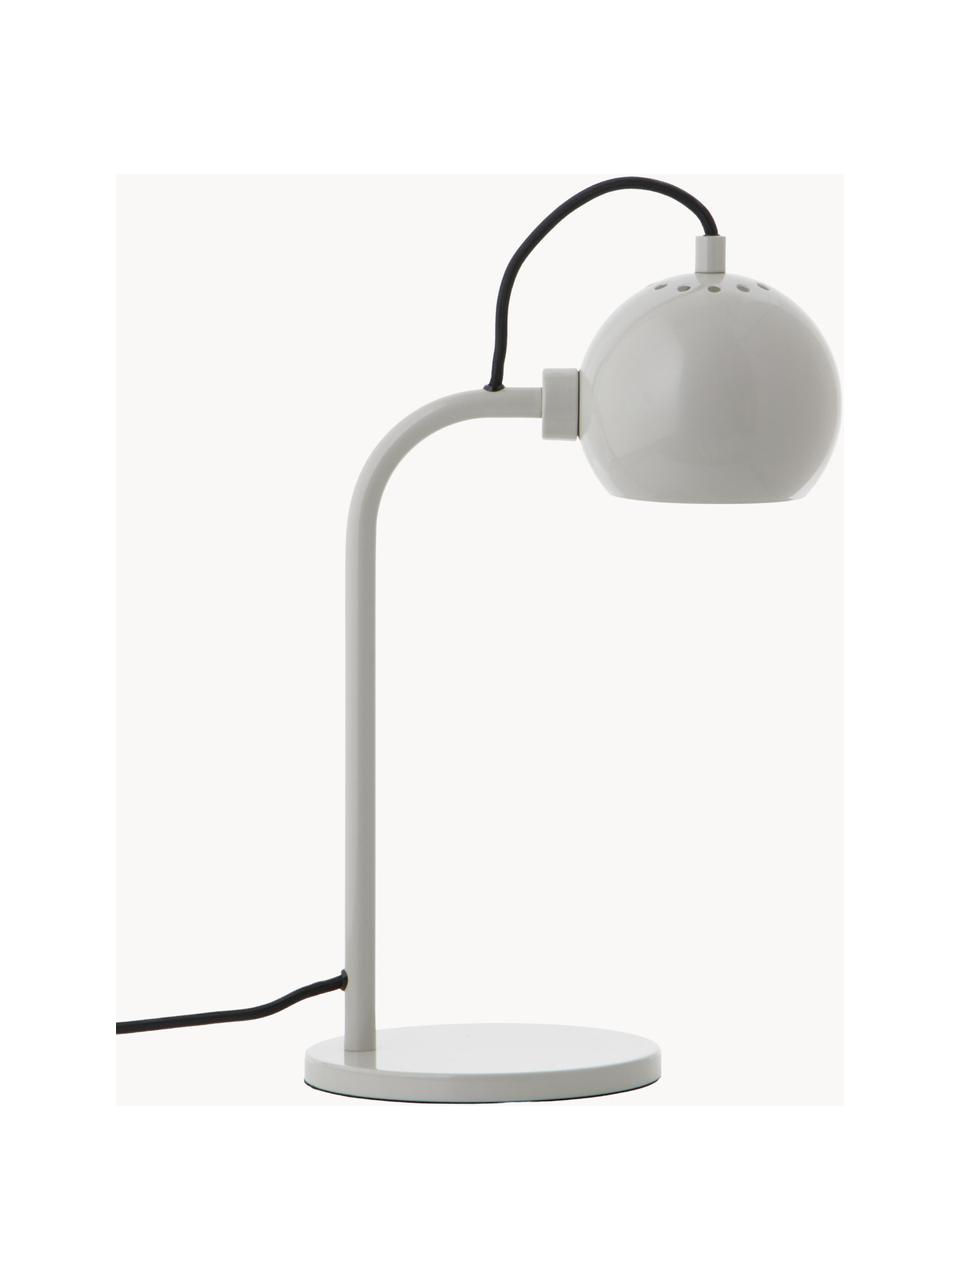 Design Tischlampe Ball, Lampenschirm: Metall, beschichtet, Lampenfuß: Metall, beschichtet, Hellgrau, B 24 x H 37 cm